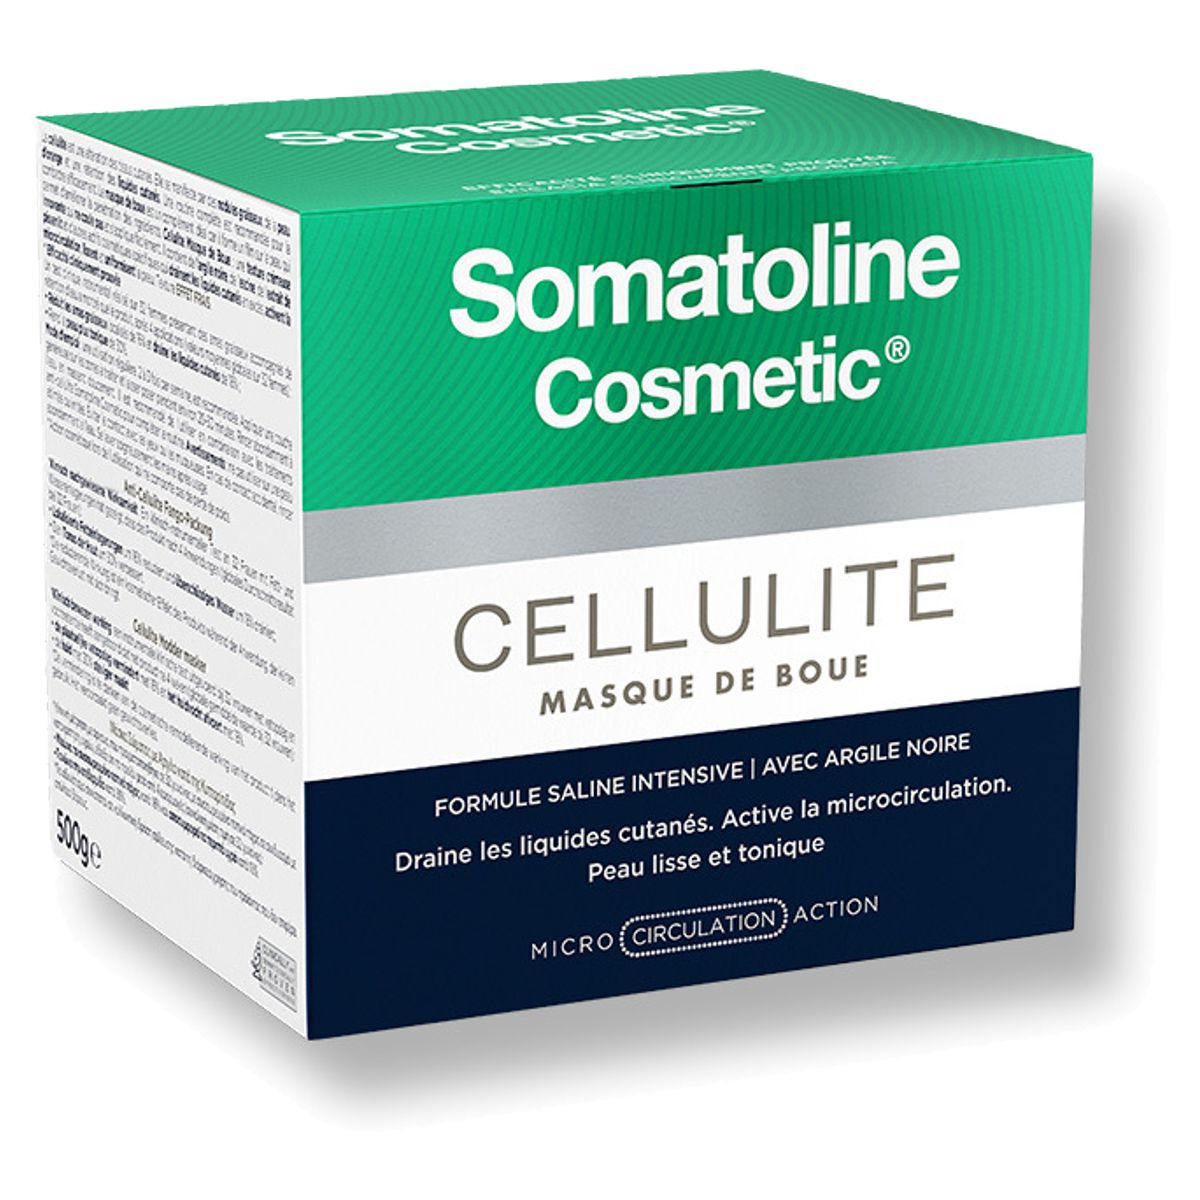 Somatoline Anti-Cellulite Fango Packung Topf 500 g